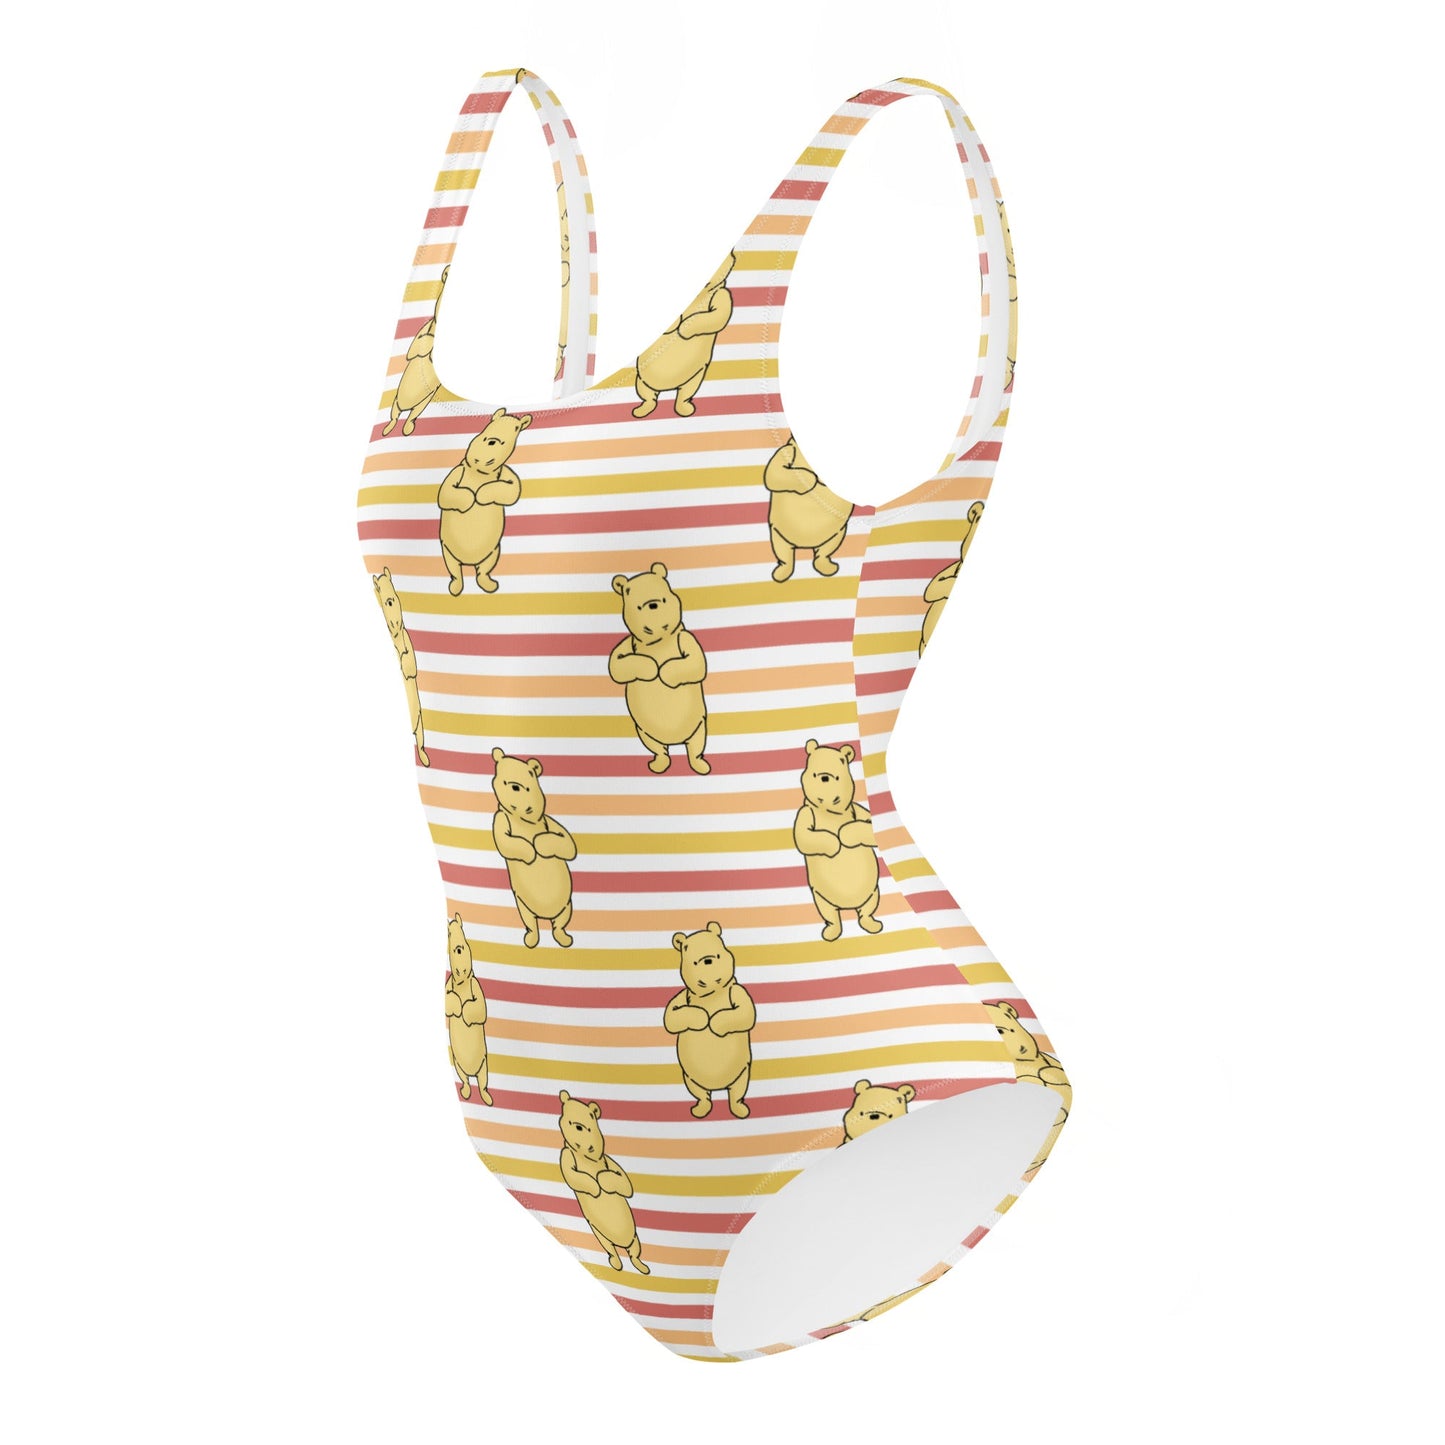 Pooh Stripes One-Piece Swimsuit adult disneyadult disney clothingWrong Lever Clothing